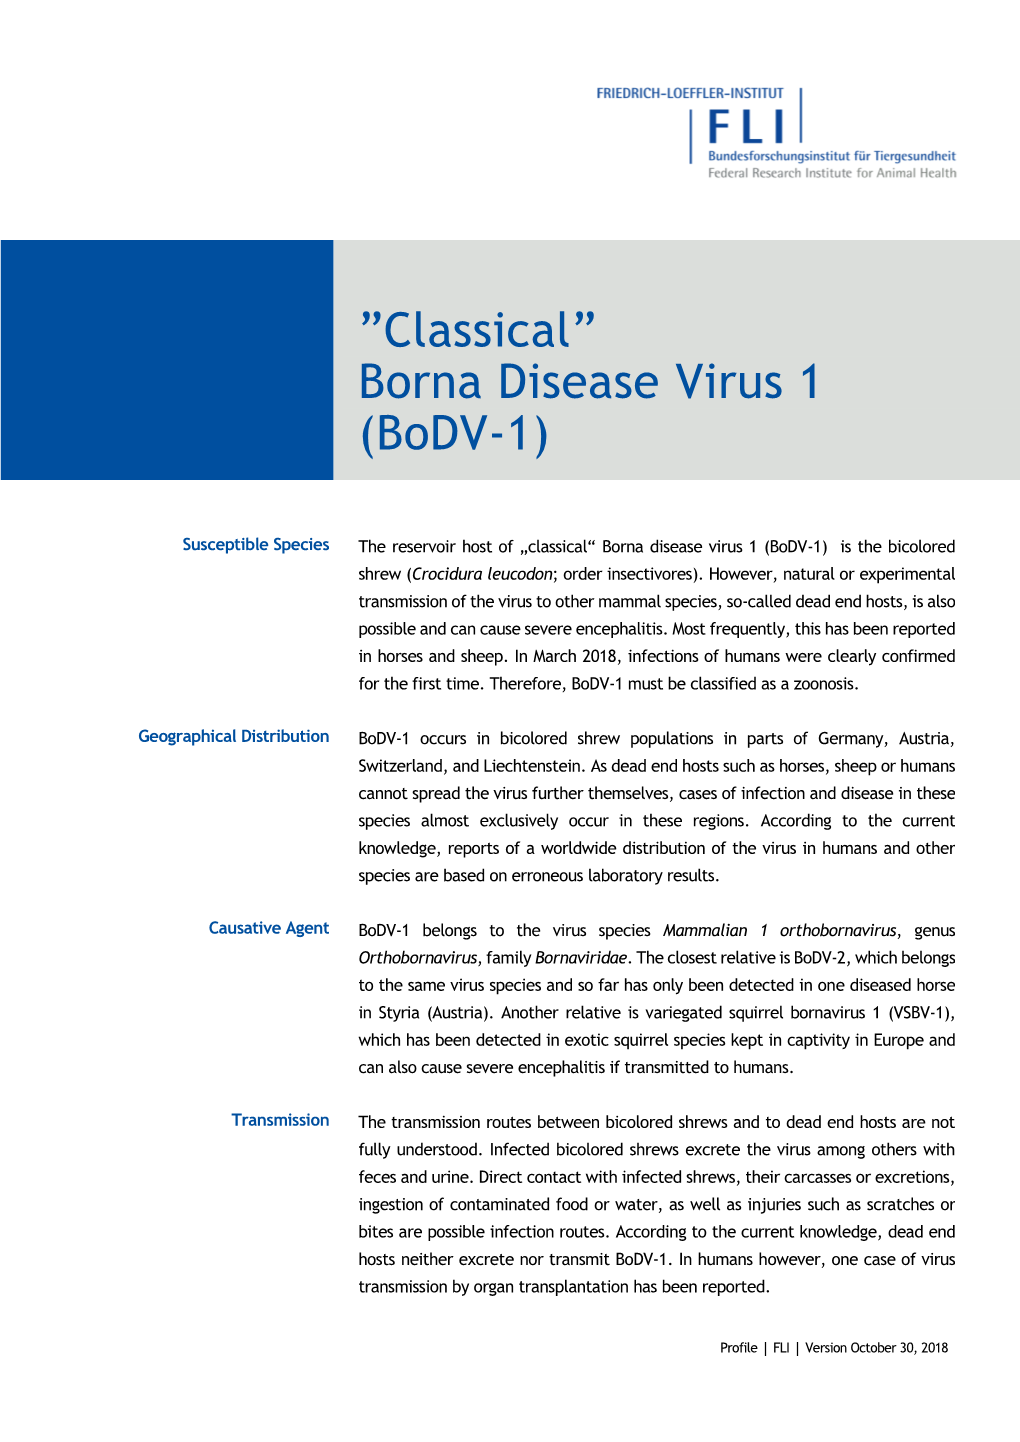 Borna Disease Virus 1 (Bodv-1)